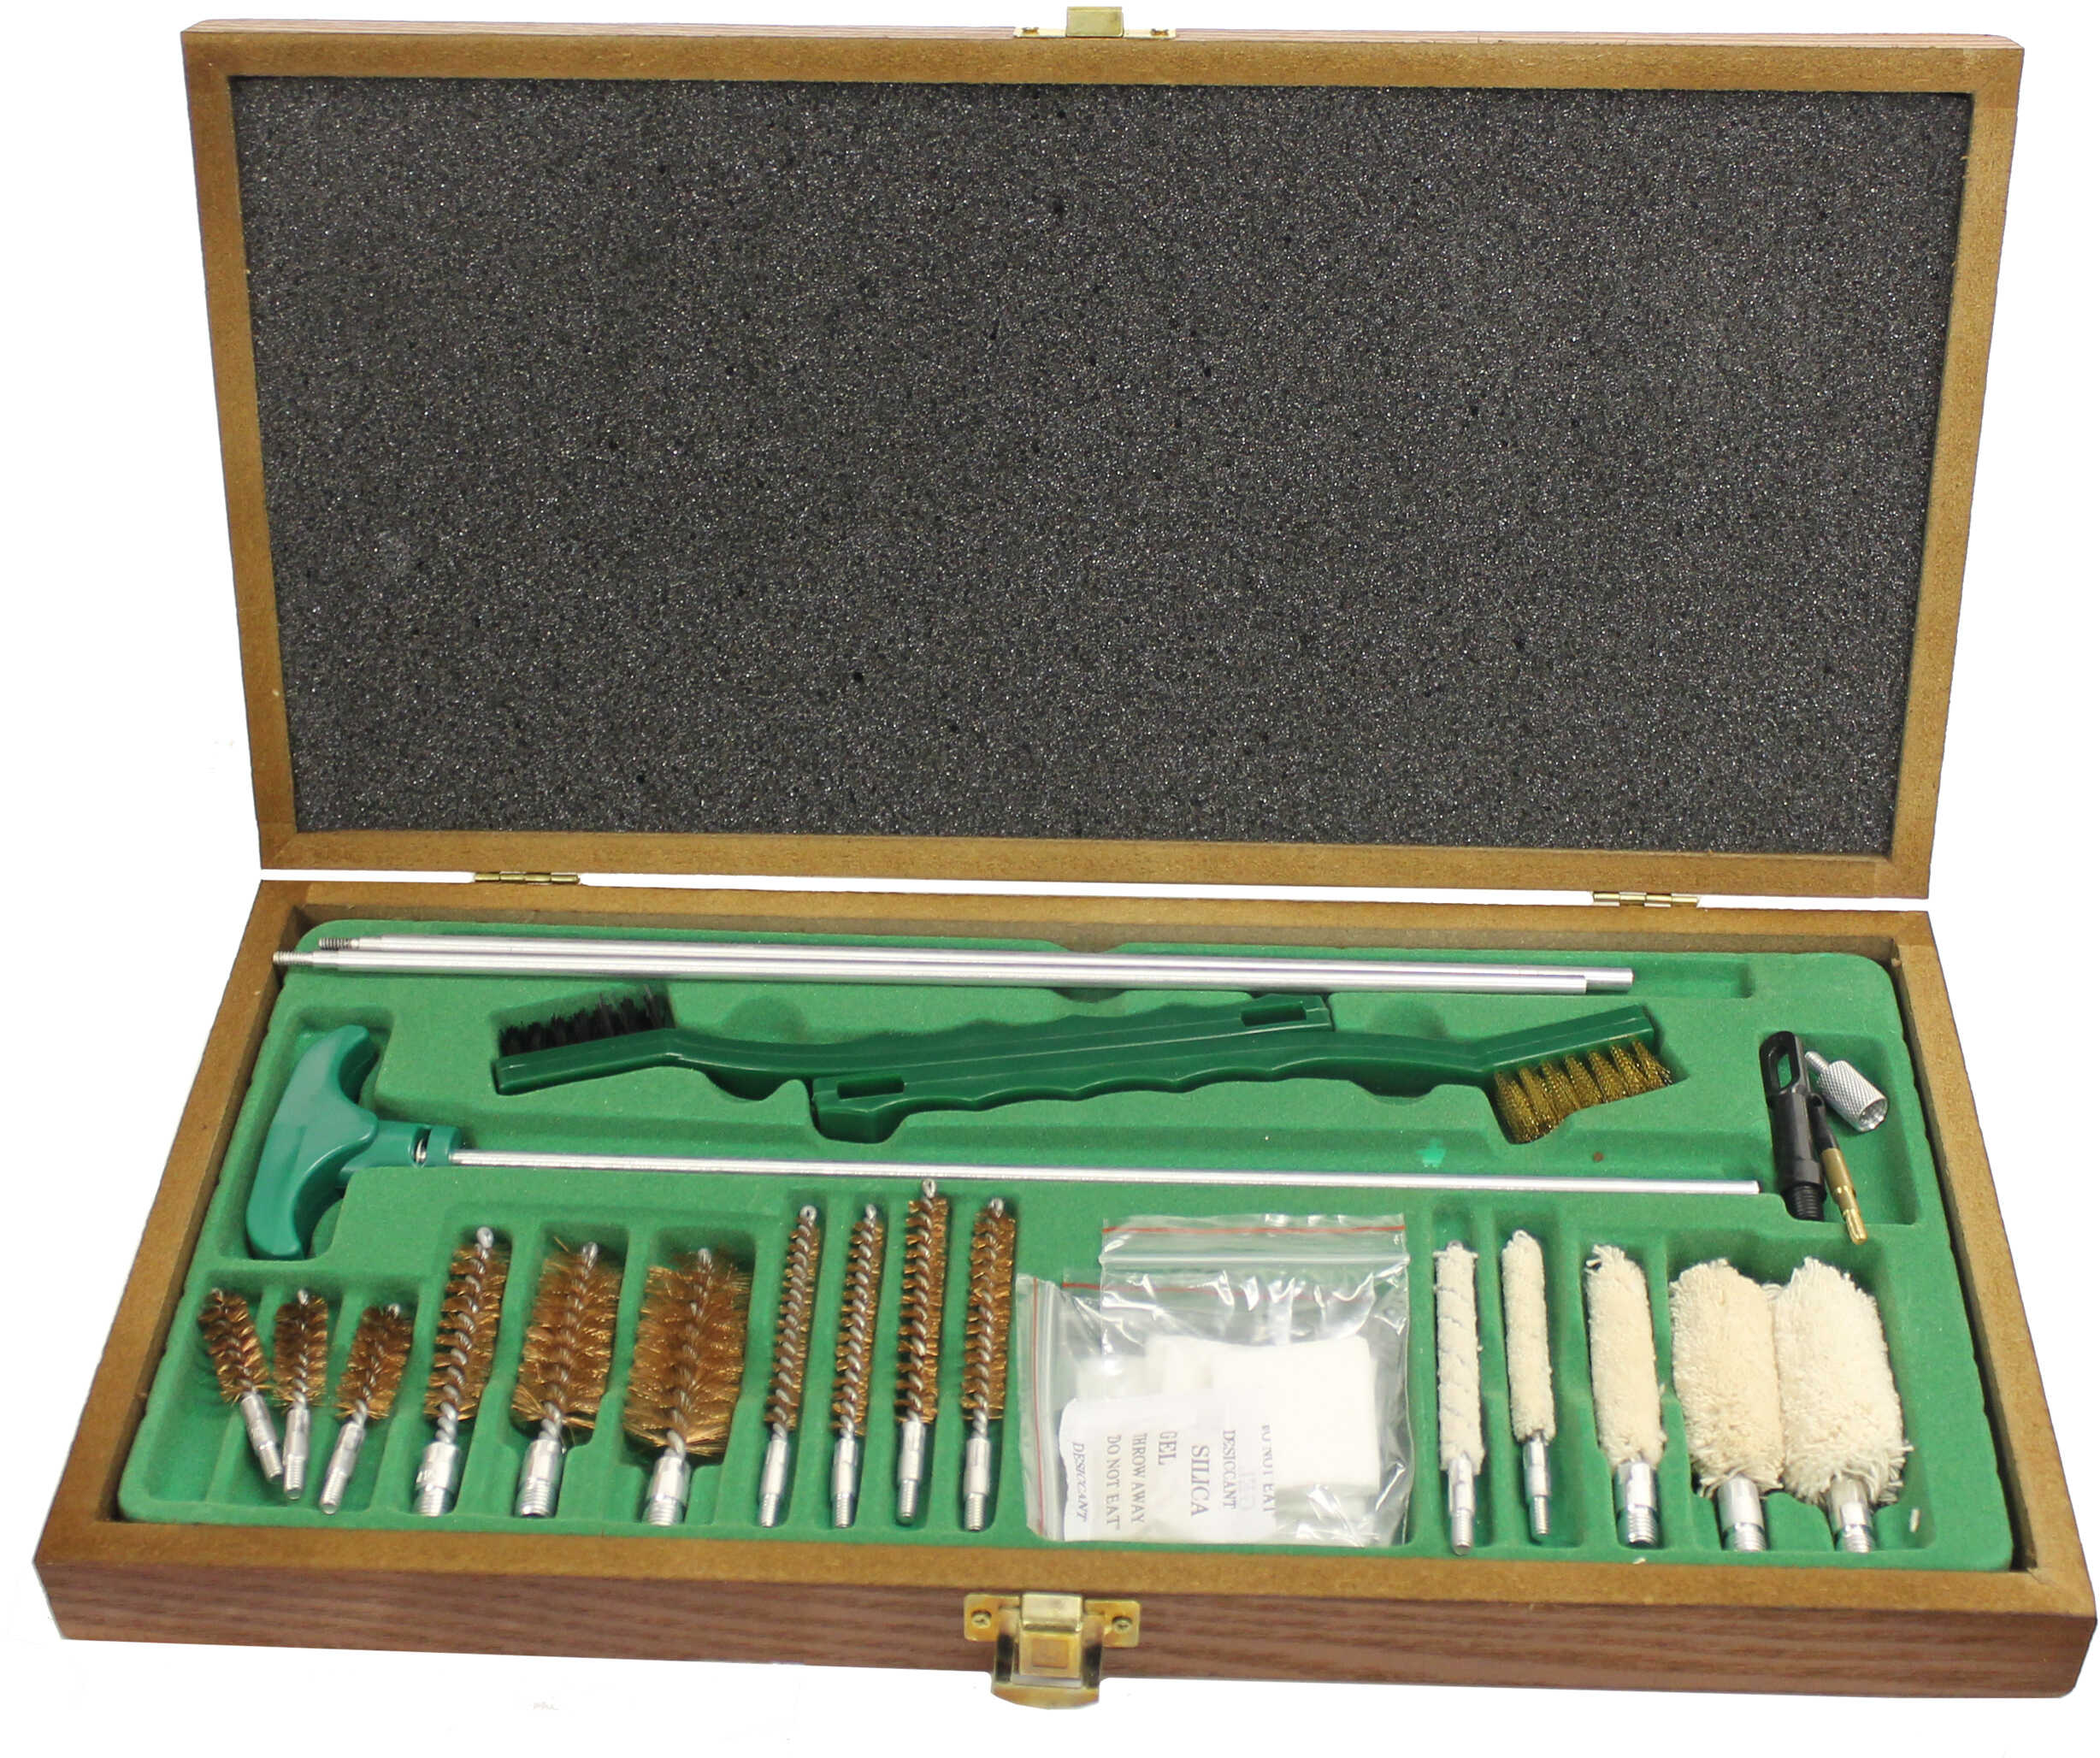 Remington Sportsman Cleaning Kit